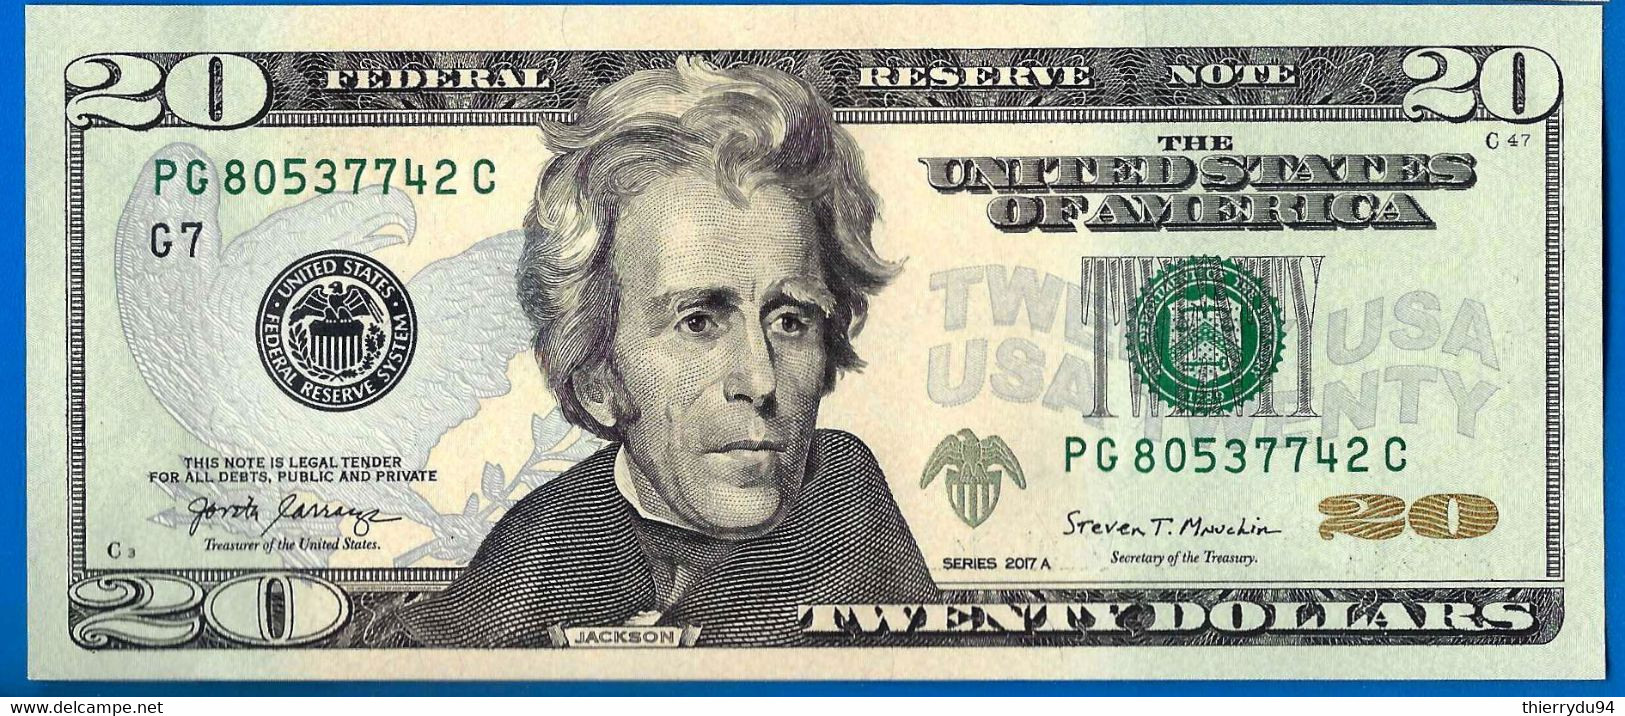 USA 20 Dollars 2017 A Neuf UNC Mint Chicago G7 PG Suffixe C Etats Unis United States Dollar US Paypal Bitcoin OK - Billetes De Estados Unidos (1862-1923)